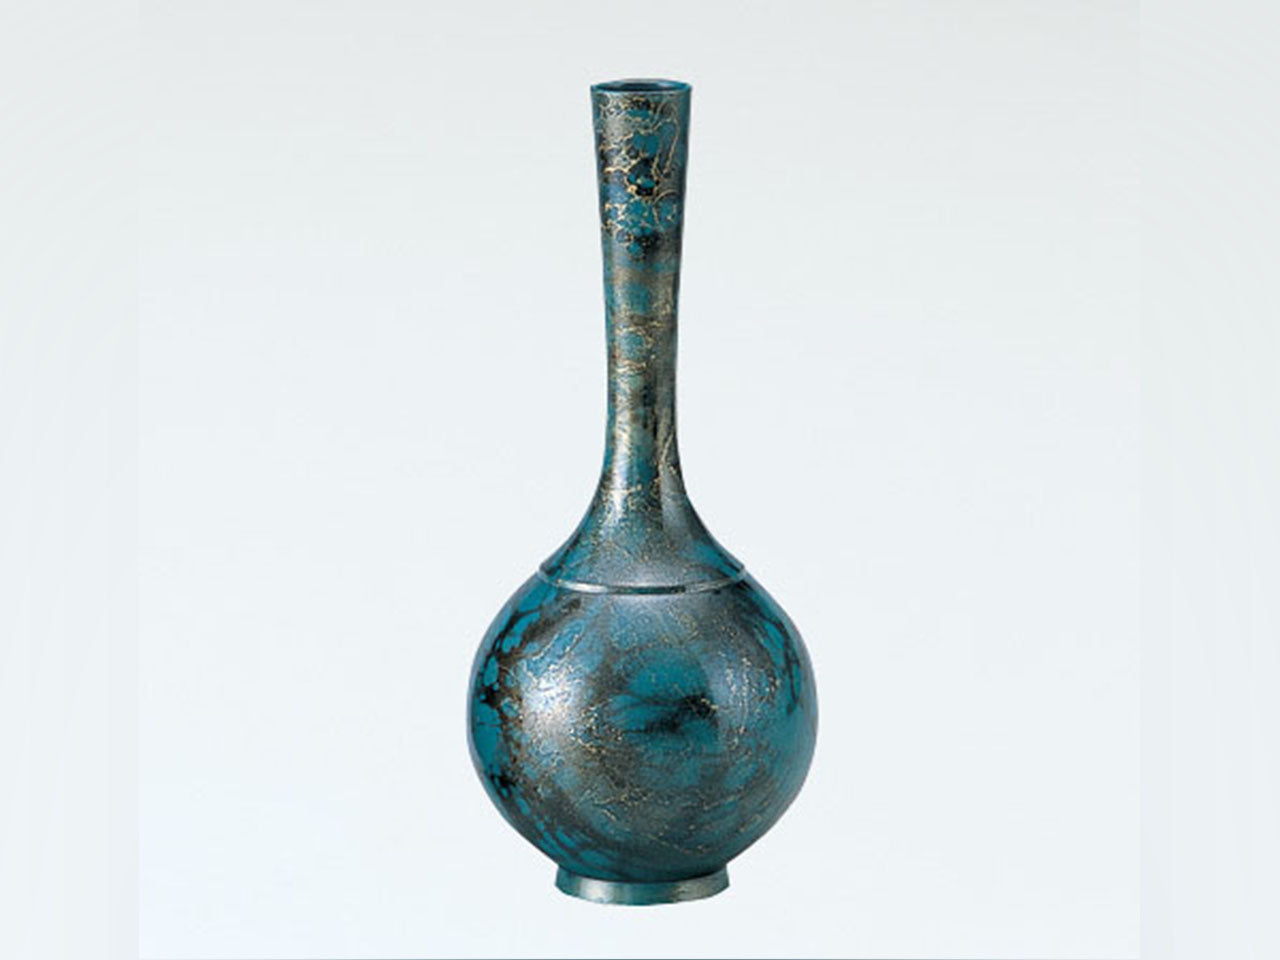 Flower vessel, Vase, Jewel shape, Small, Green - Takaoka copperware, Metalwork